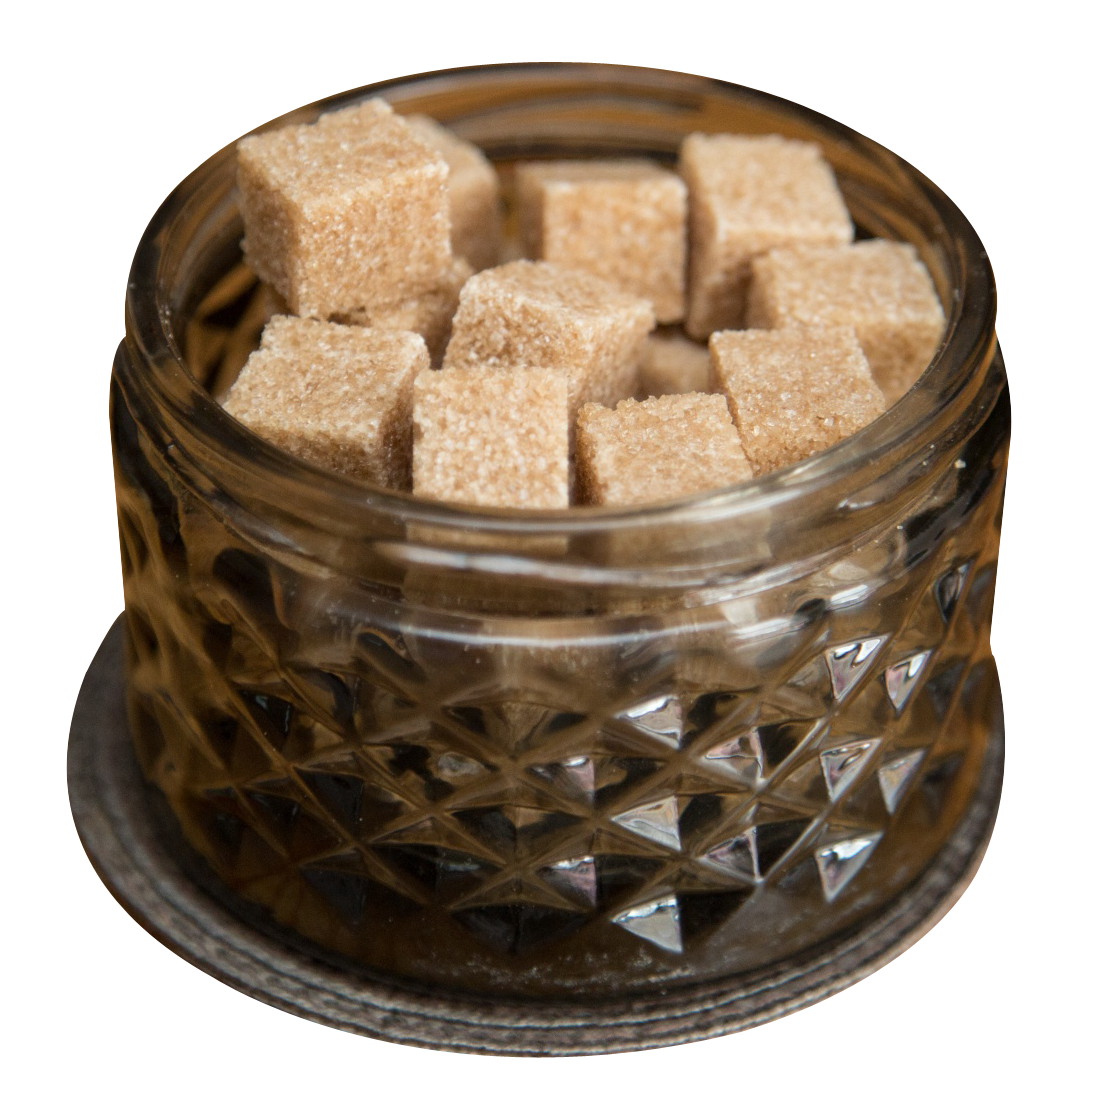 brown cane sugar cubes png image pngpix